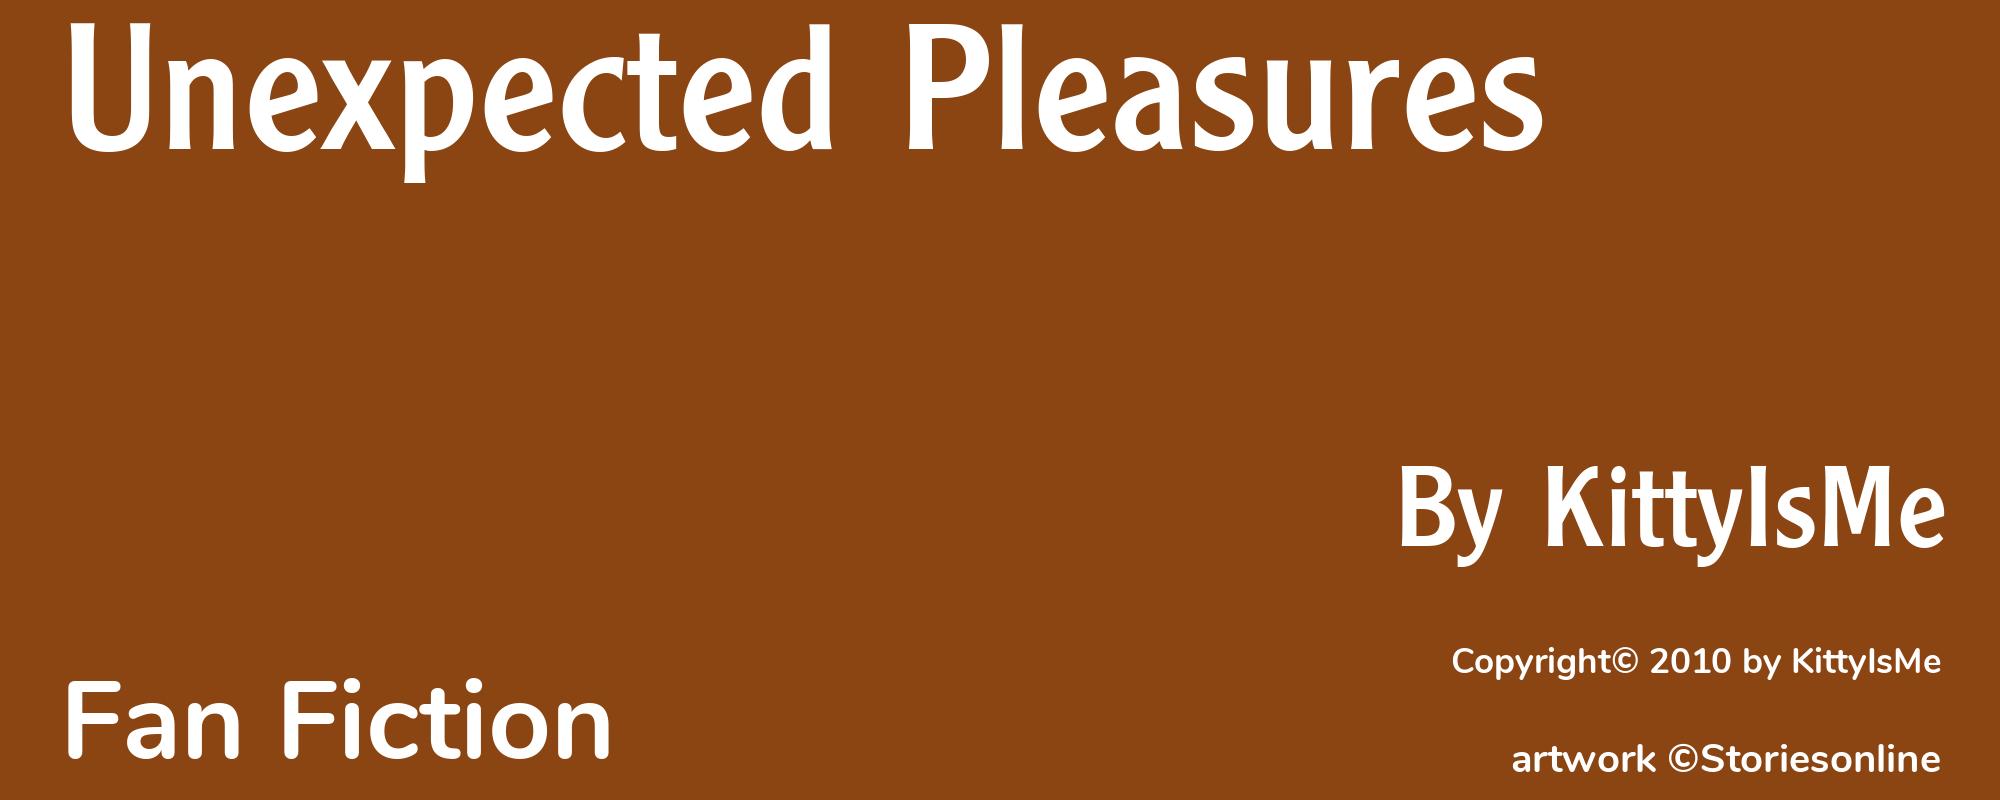 Unexpected Pleasures - Cover